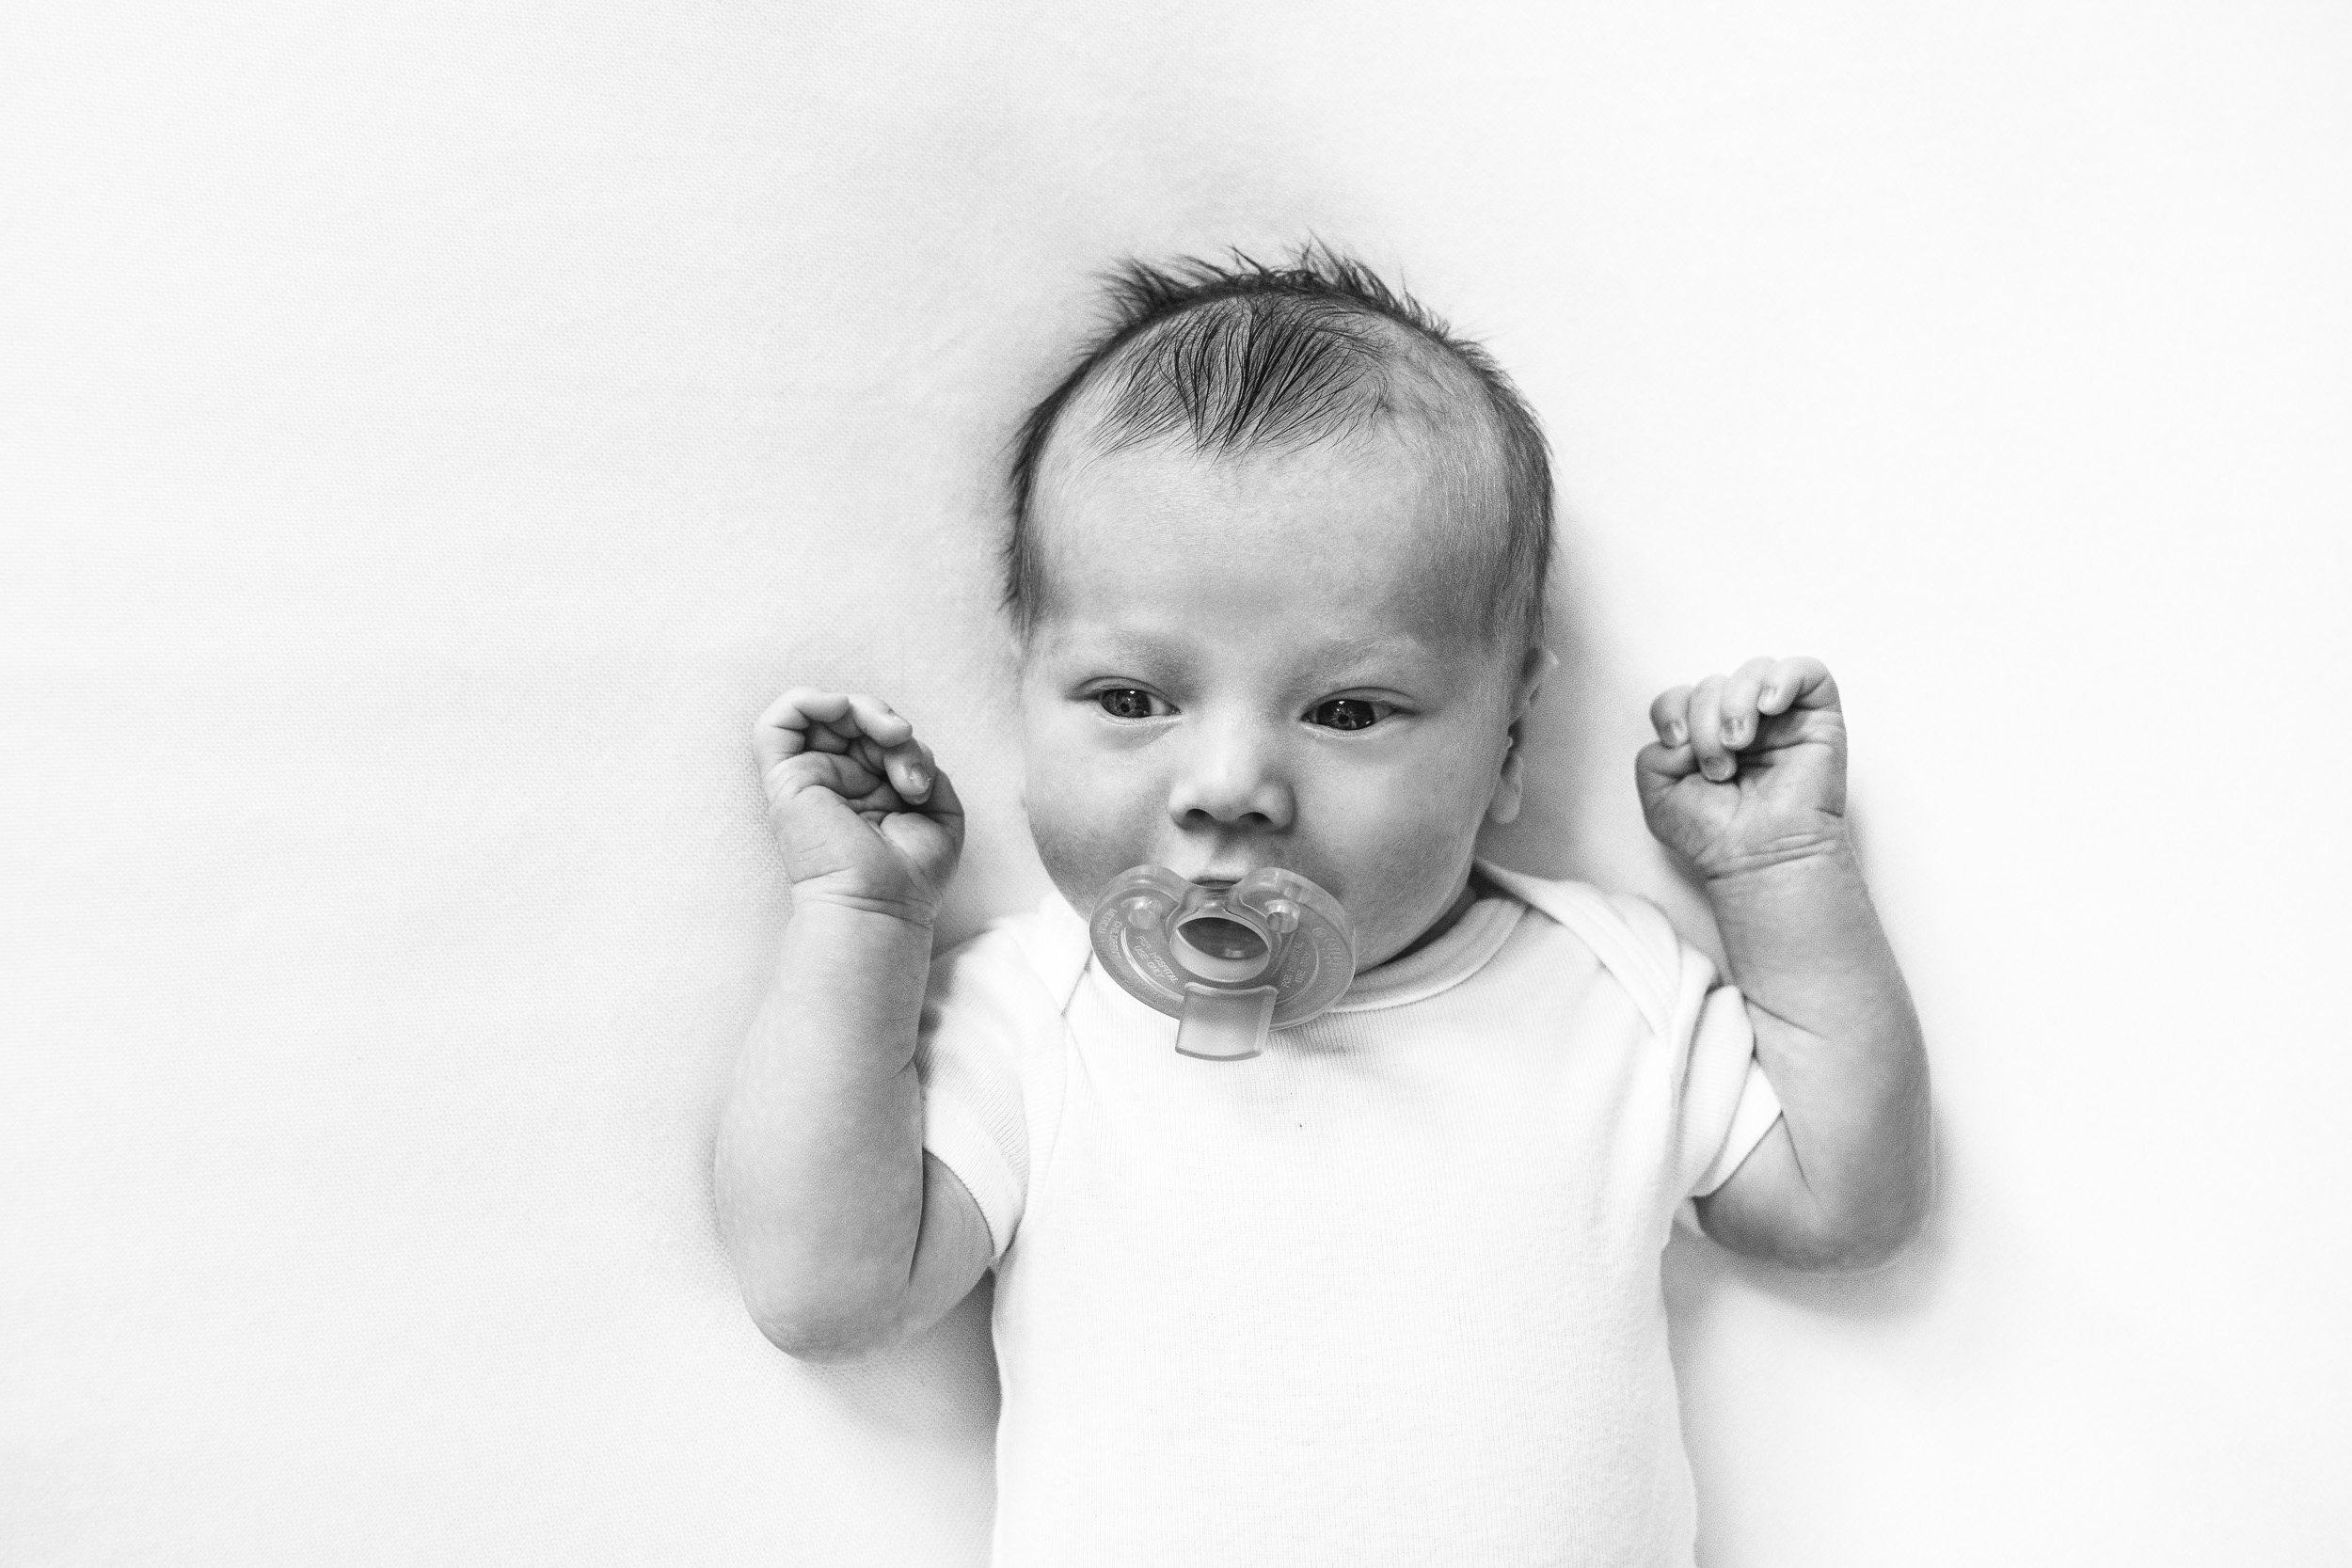  New Jersey family photographer Nicole Hawkins Photography captures a portrait of a newborn with a binkie in his mouth. binkie portrait #NewbornSession #NJfamilyphotographer #Inhomebabyphotog #newborn #NicoleHawkinsPhotography #NicoleHawkinsNewborns 